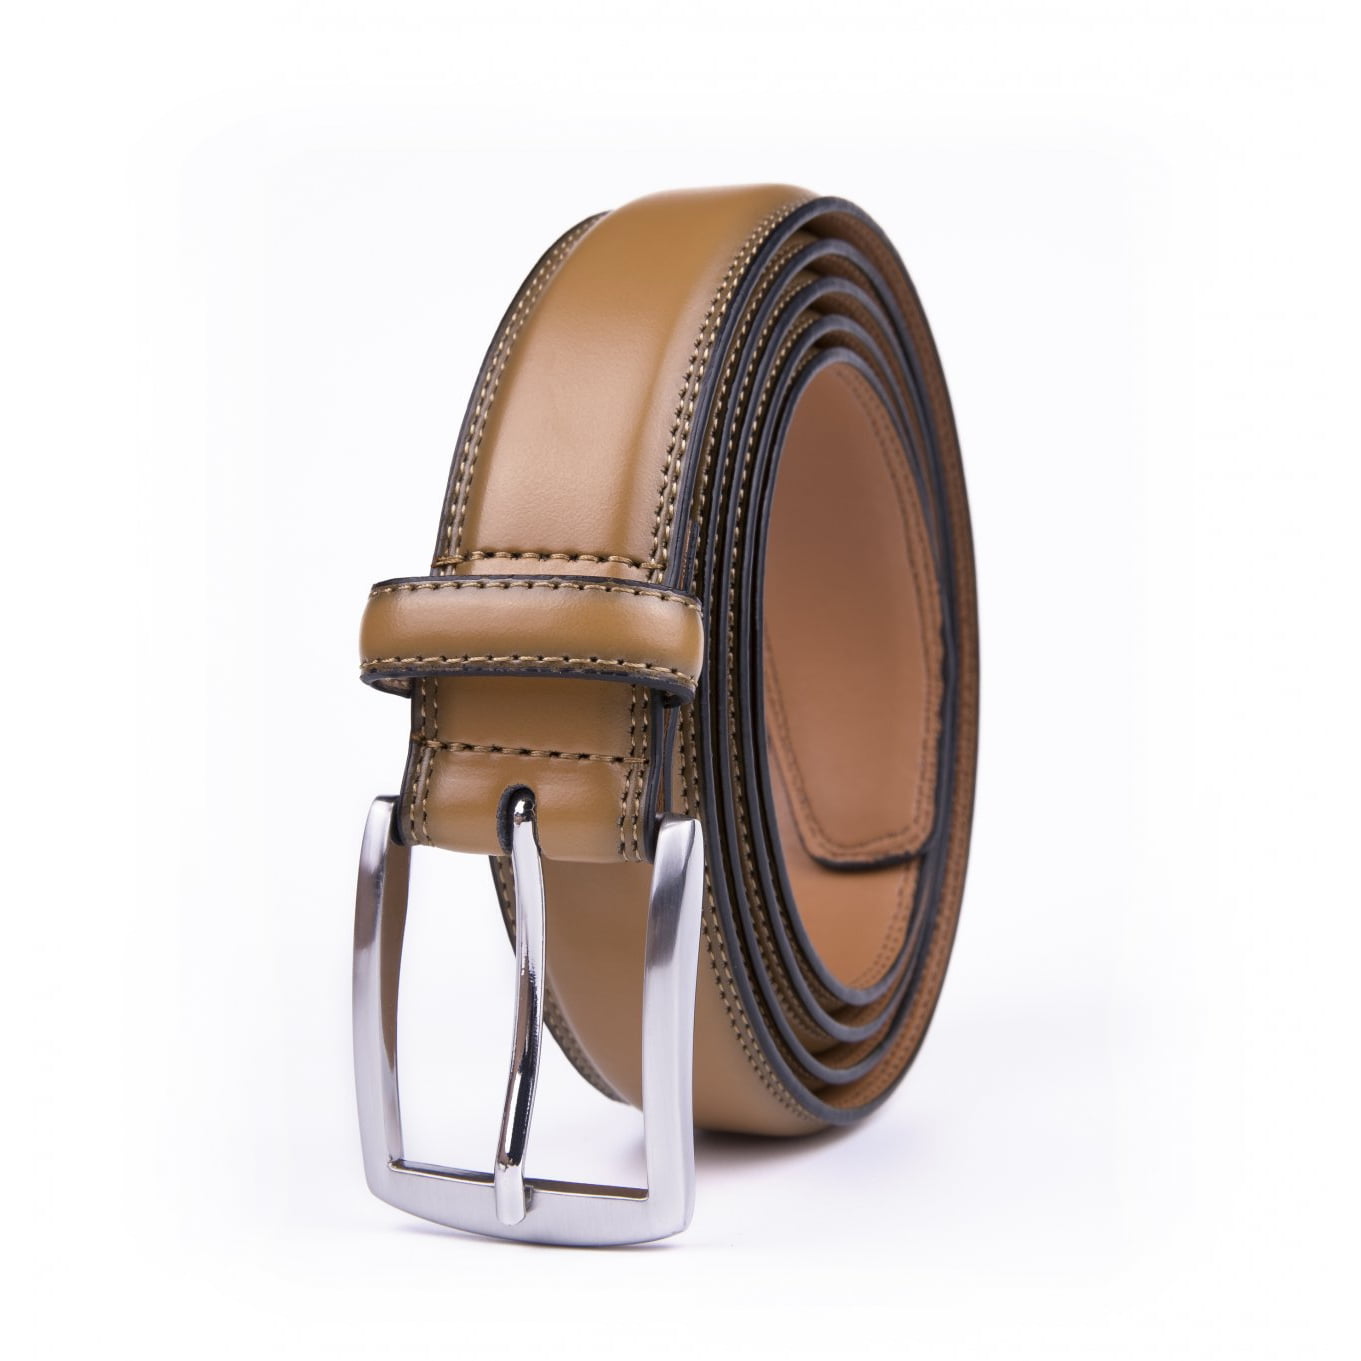 Dress Belt Men Tan 1.25-inch Wide Real Leather Casual Belts For Men